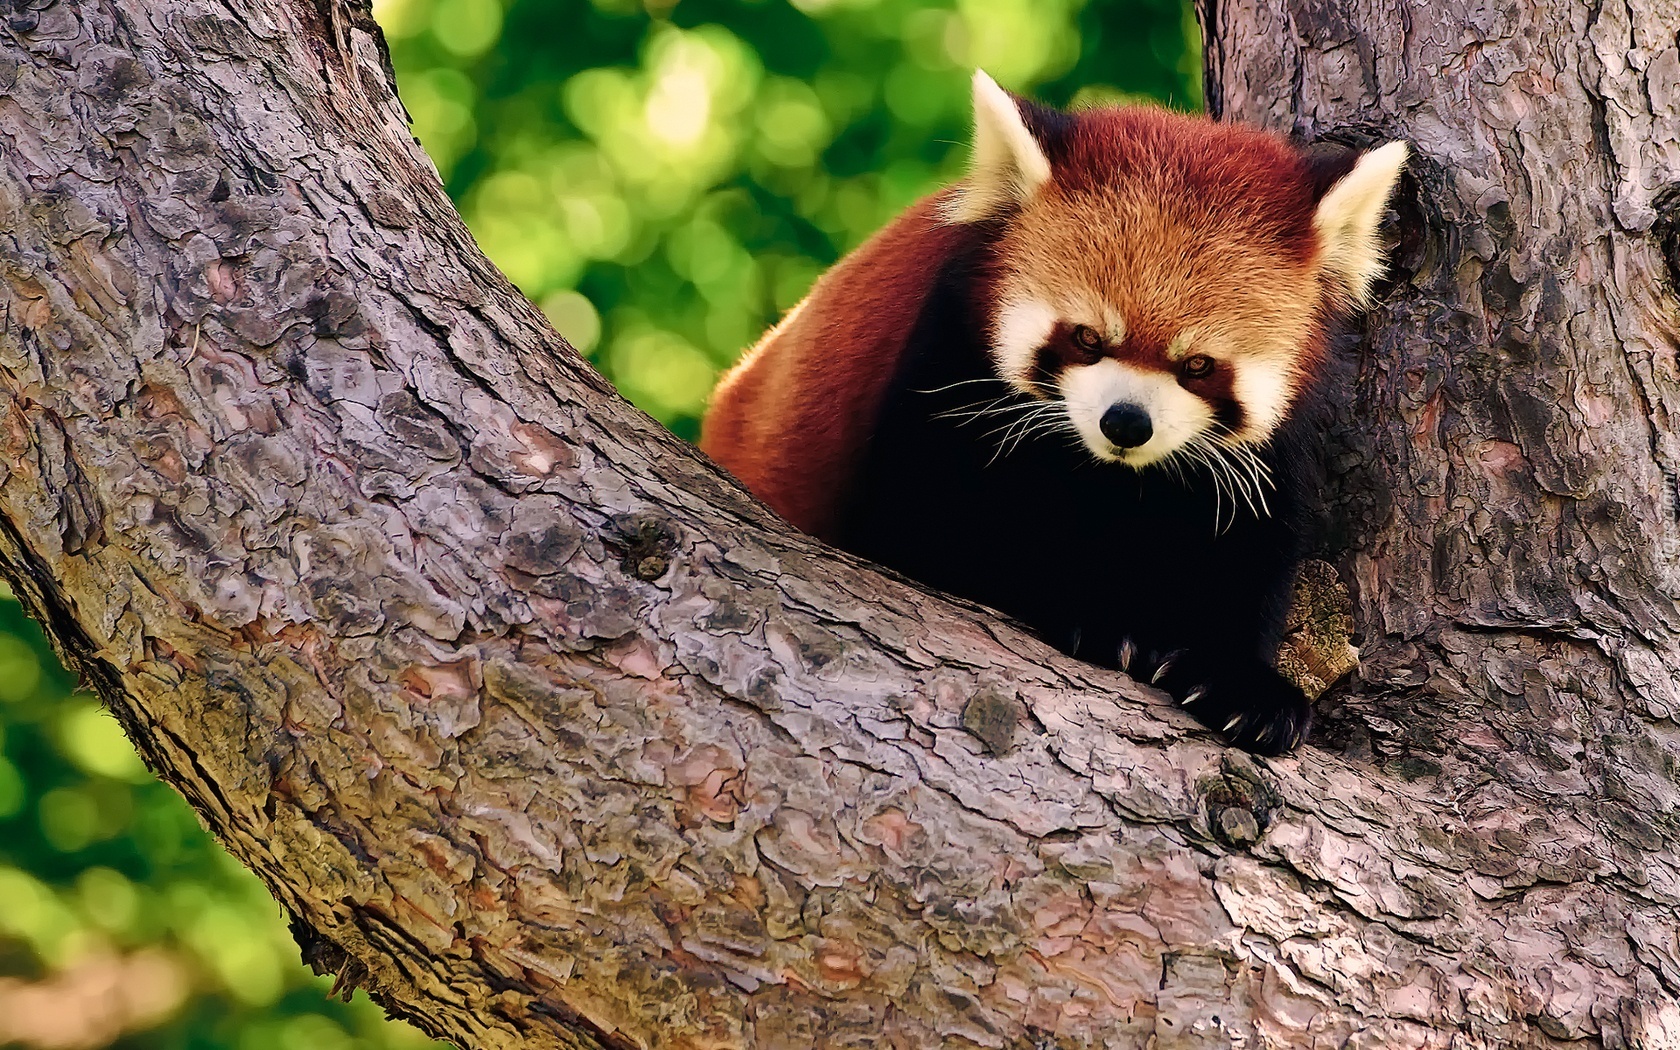 Czerwona, Panda, Drzewo, Pandka ruda